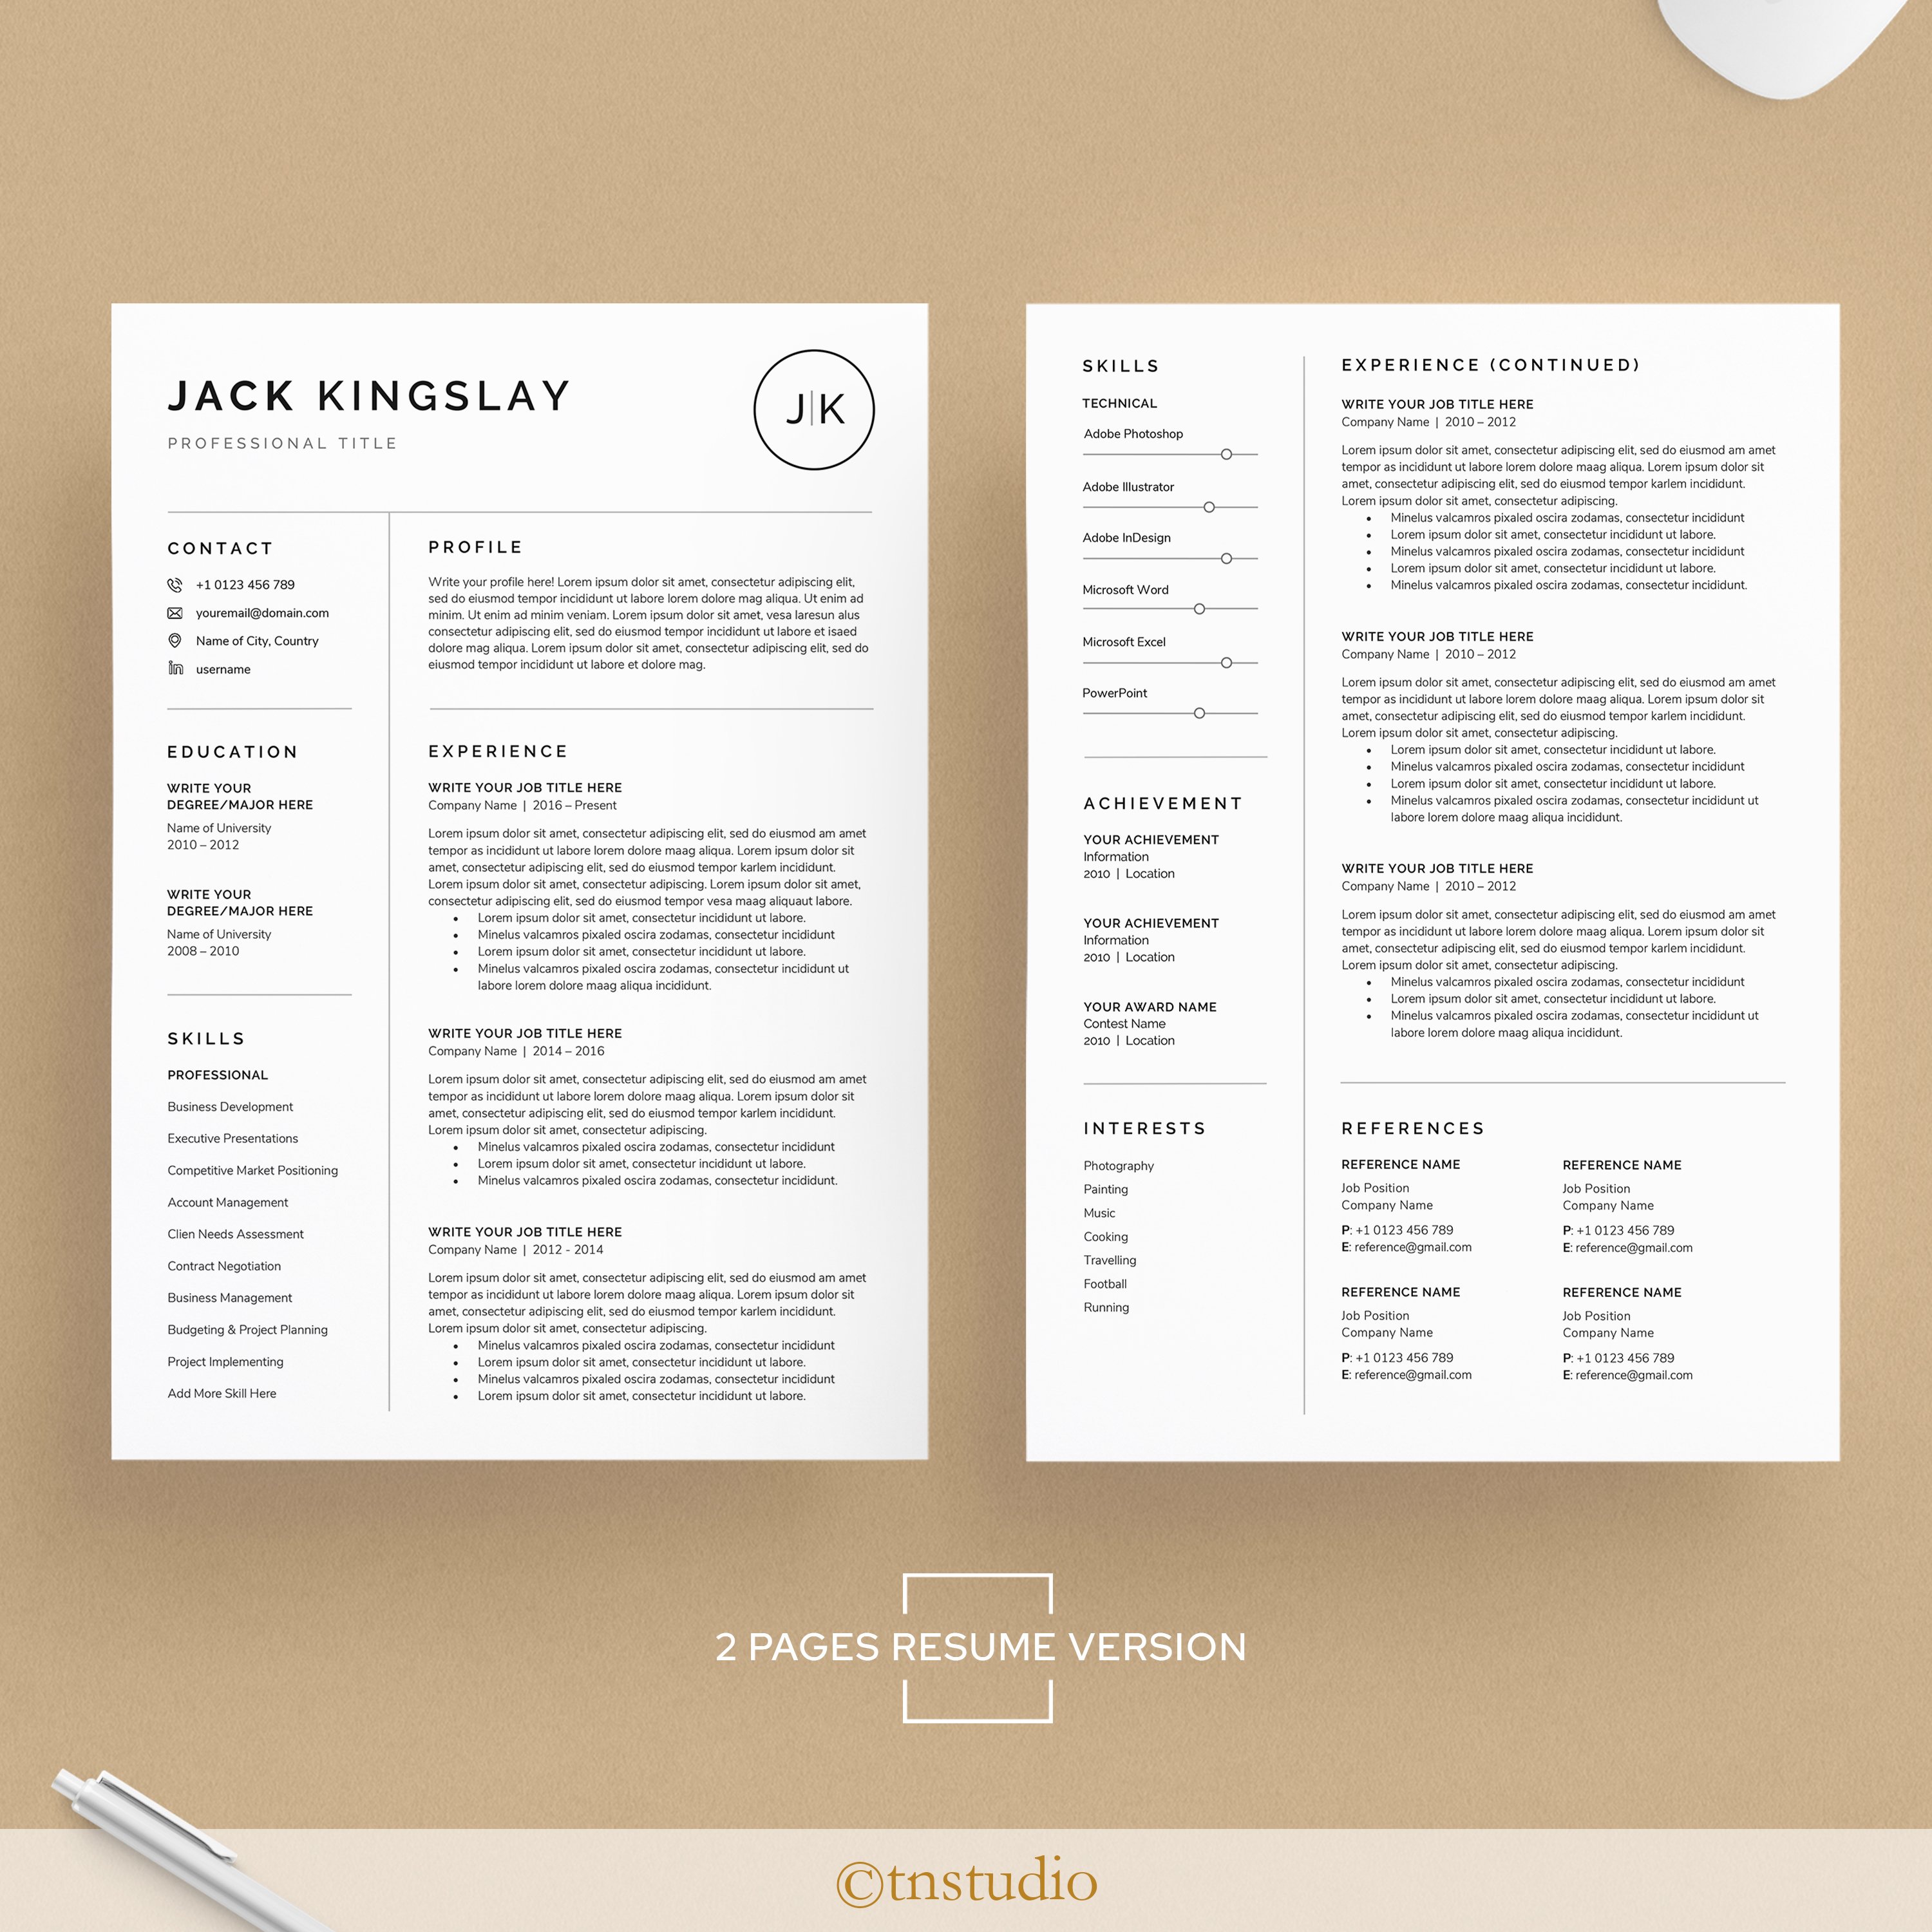 Resume/CV - JK preview image.